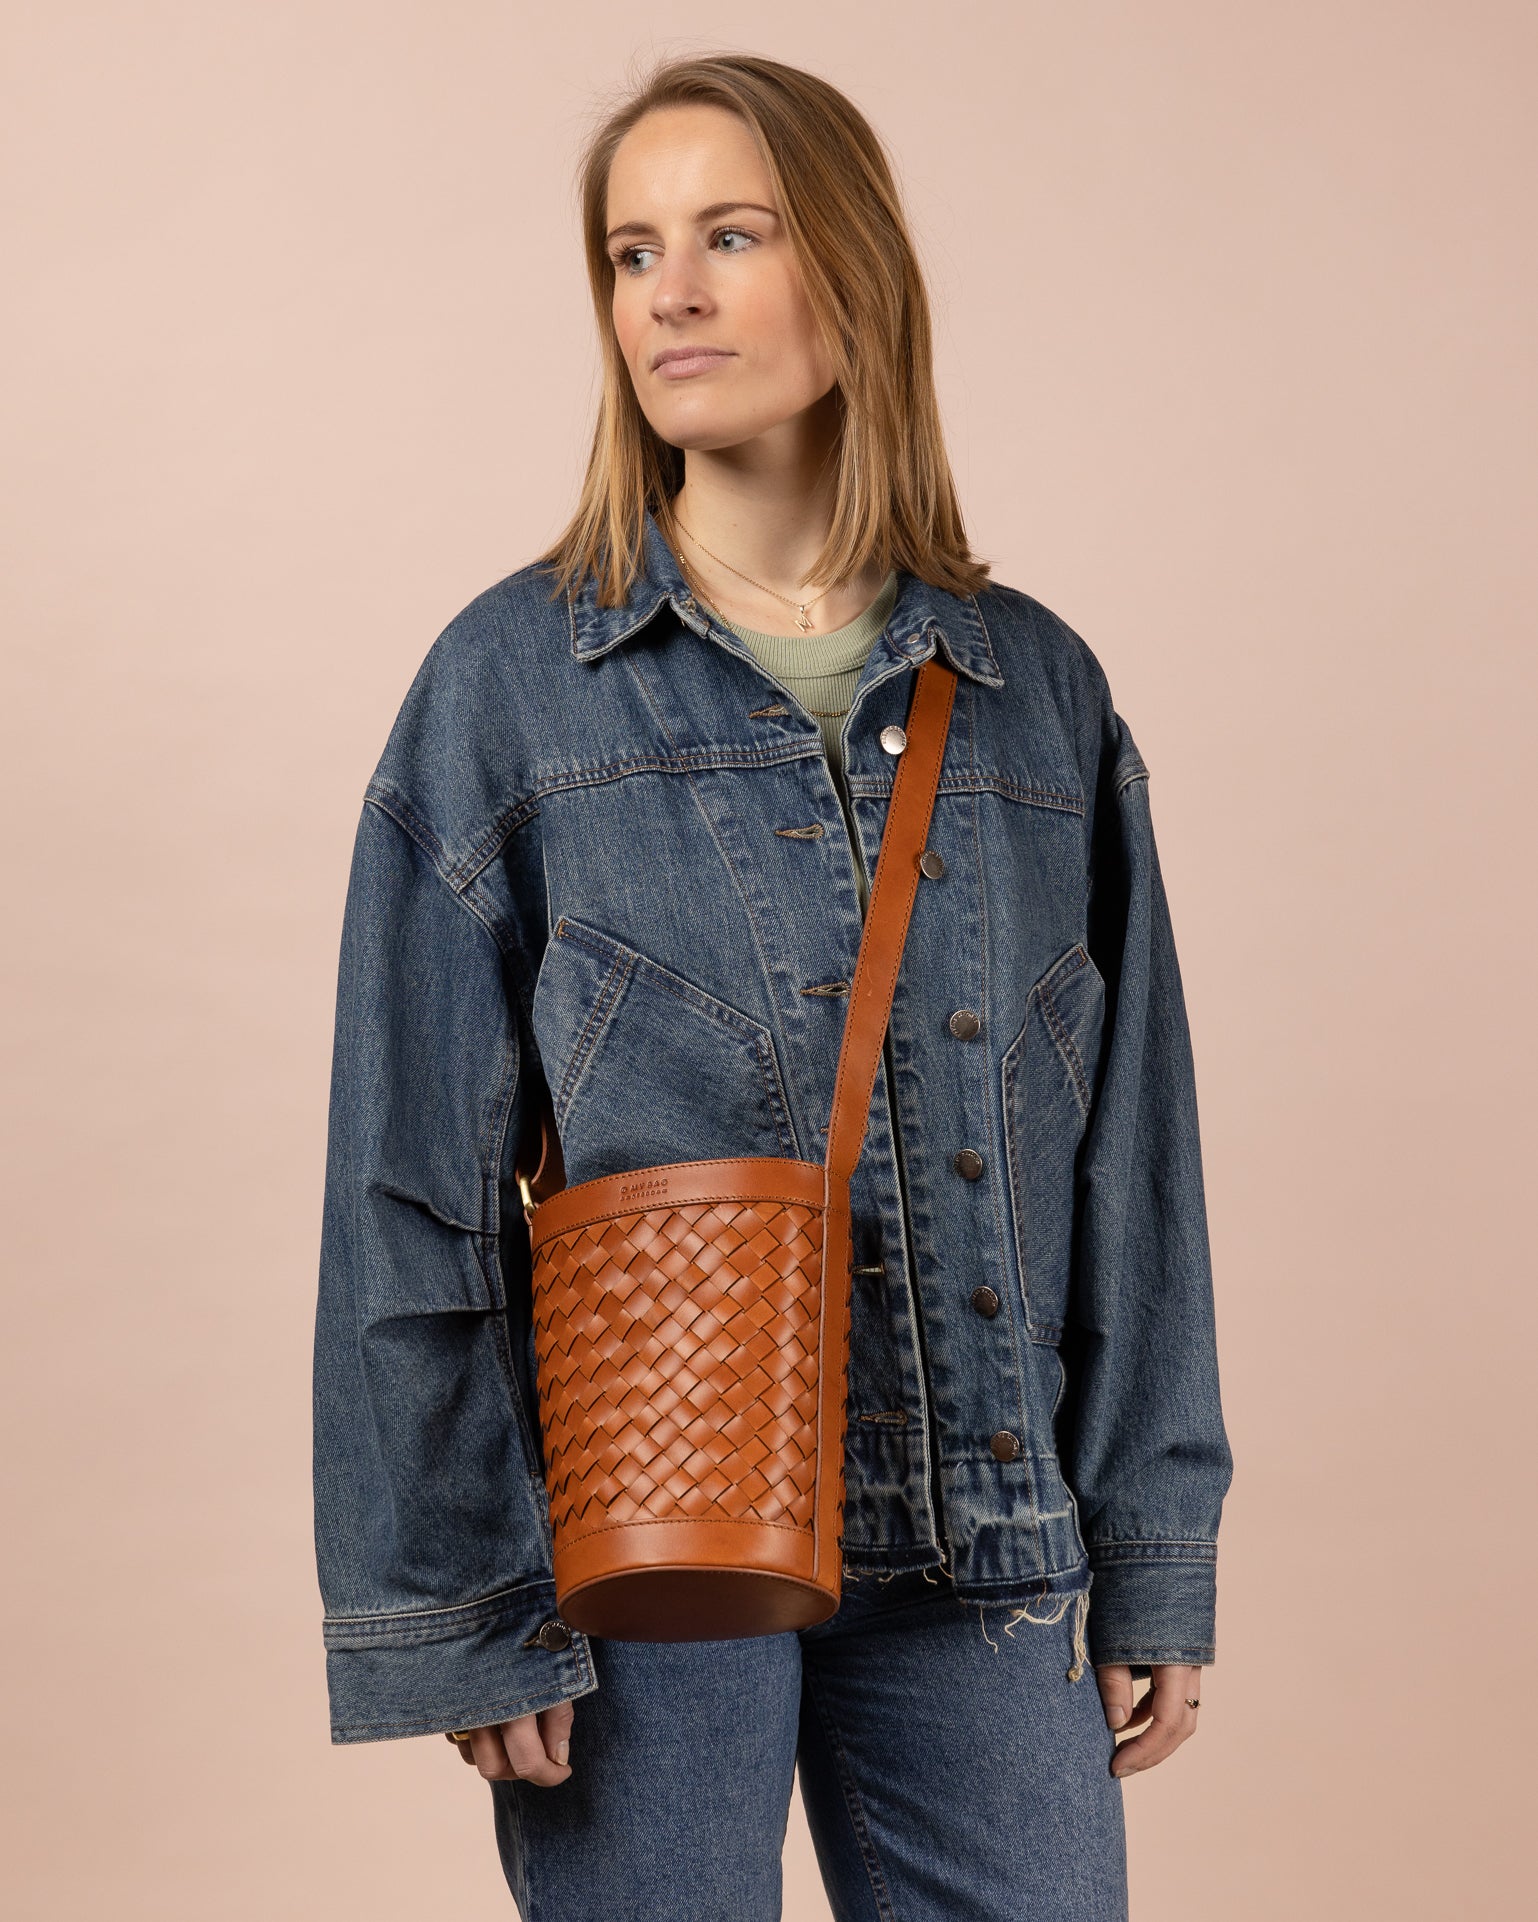 Image of model holding circular woven bucket bag in cognac leather. Cross-body shot.